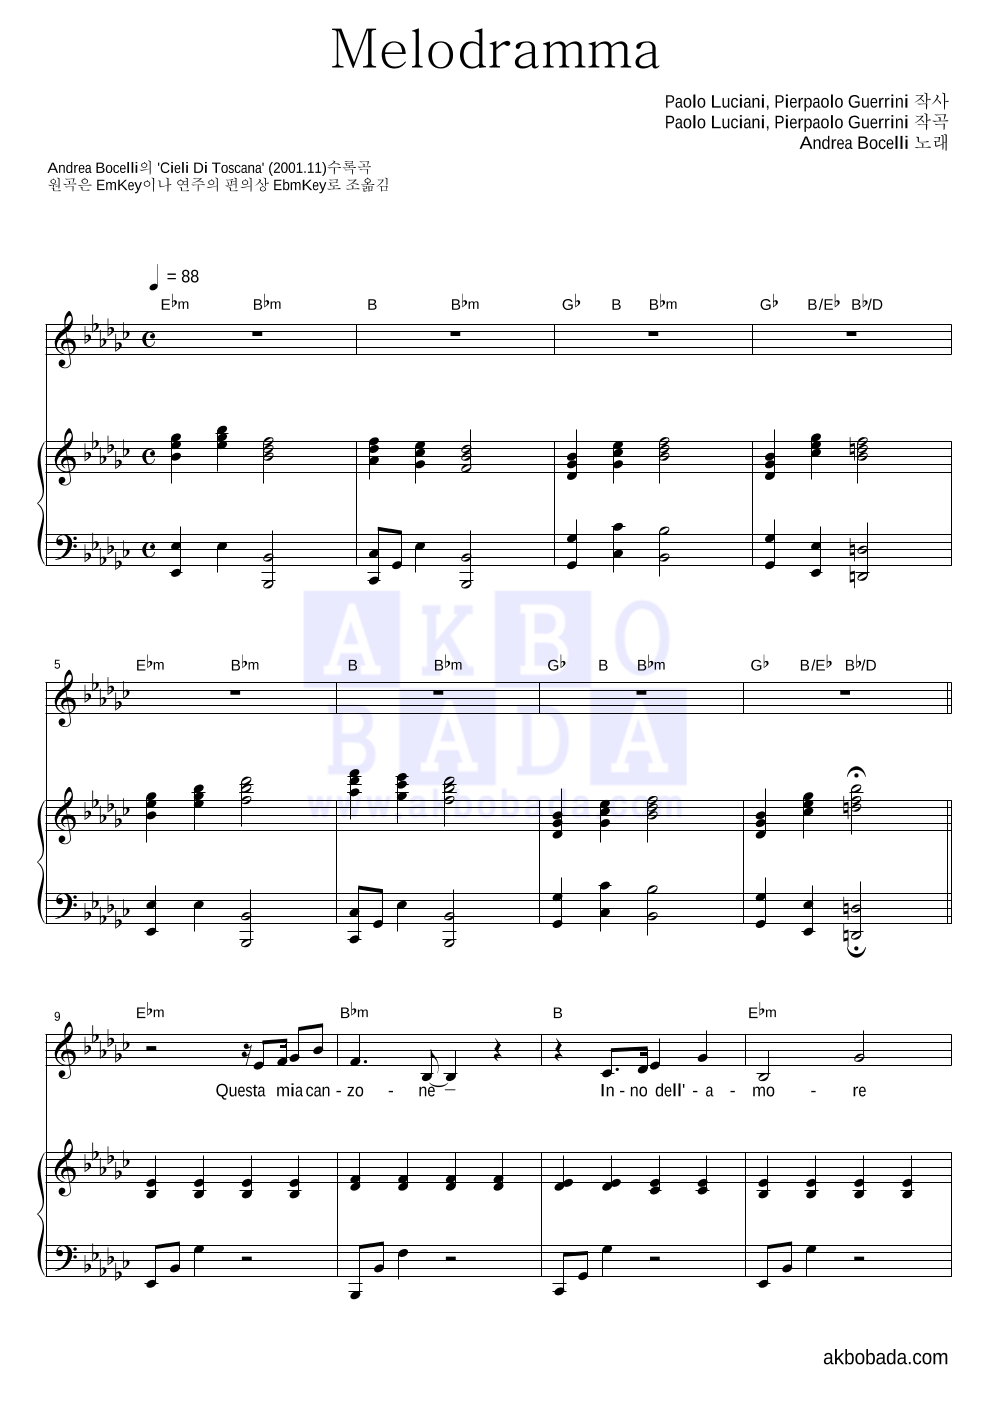 Andrea Bocelli - Melodramma 피아노 3단 악보 